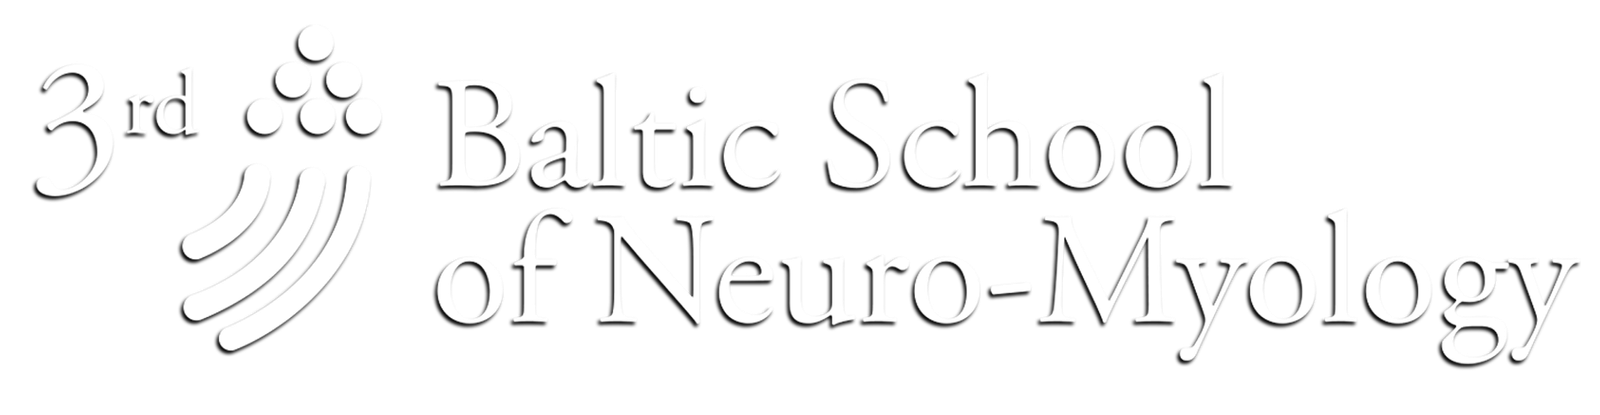 Baltic School of Neuro-Myology